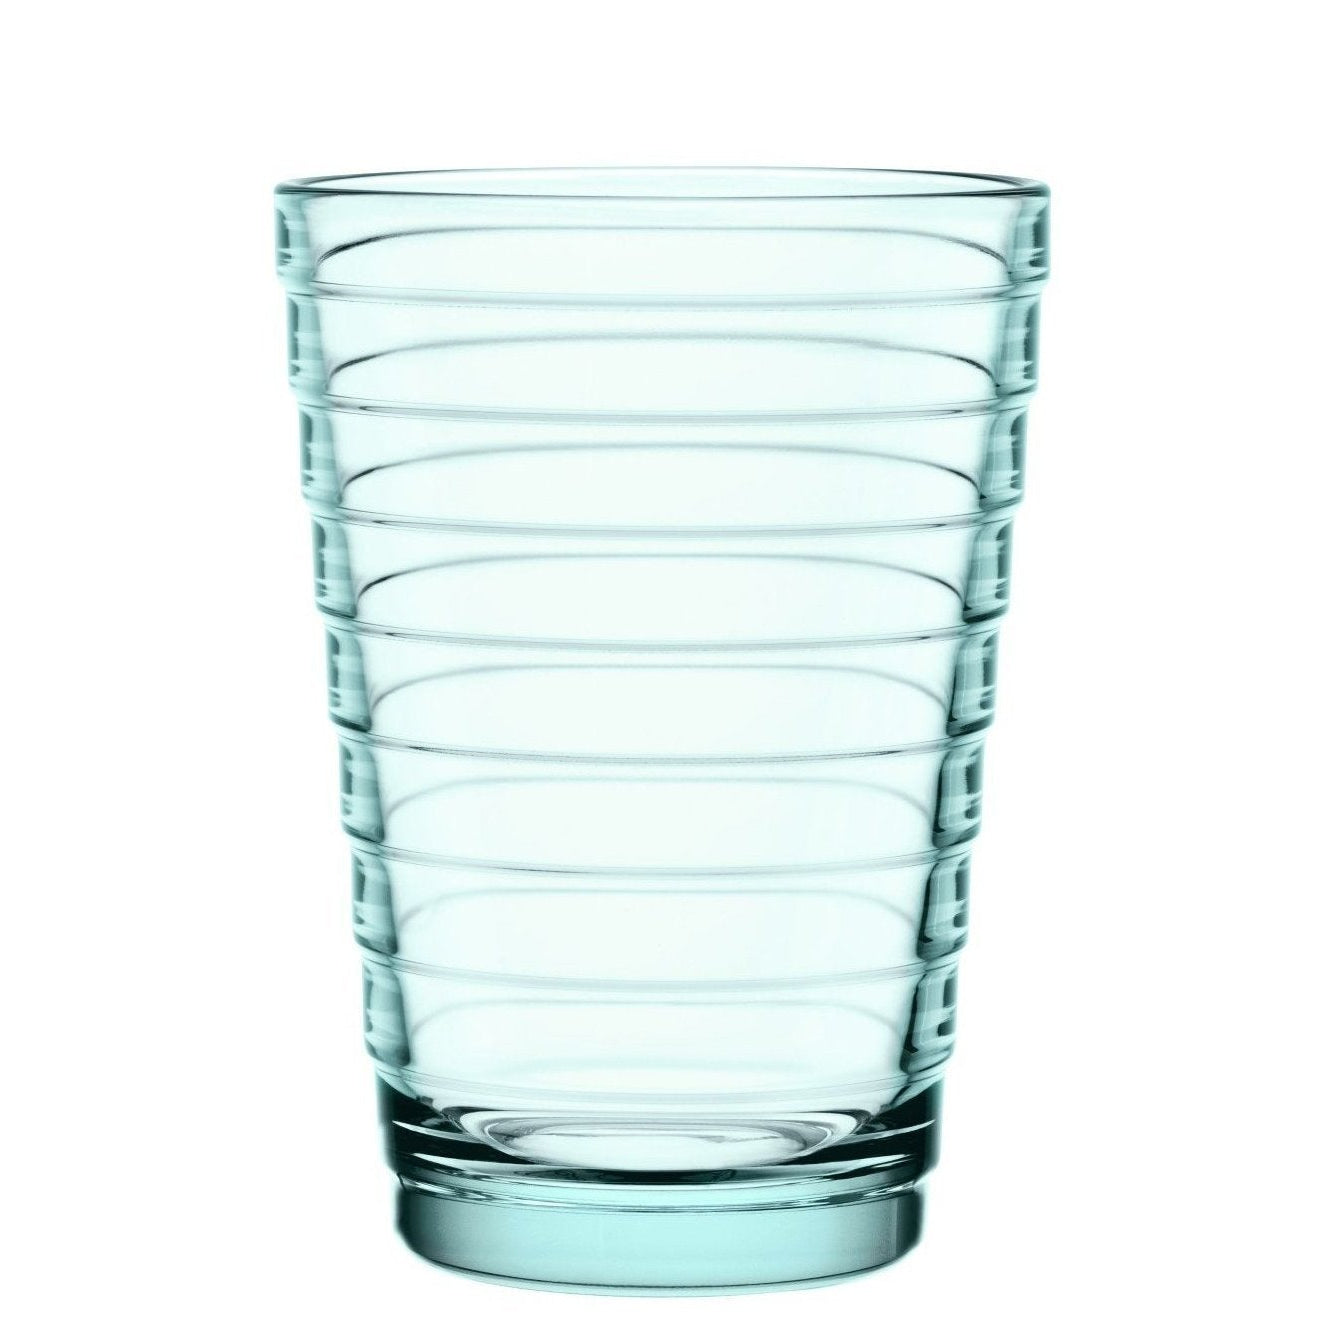 Iittala Aino Aalto Glasses Water Green 2pcs, 33cl